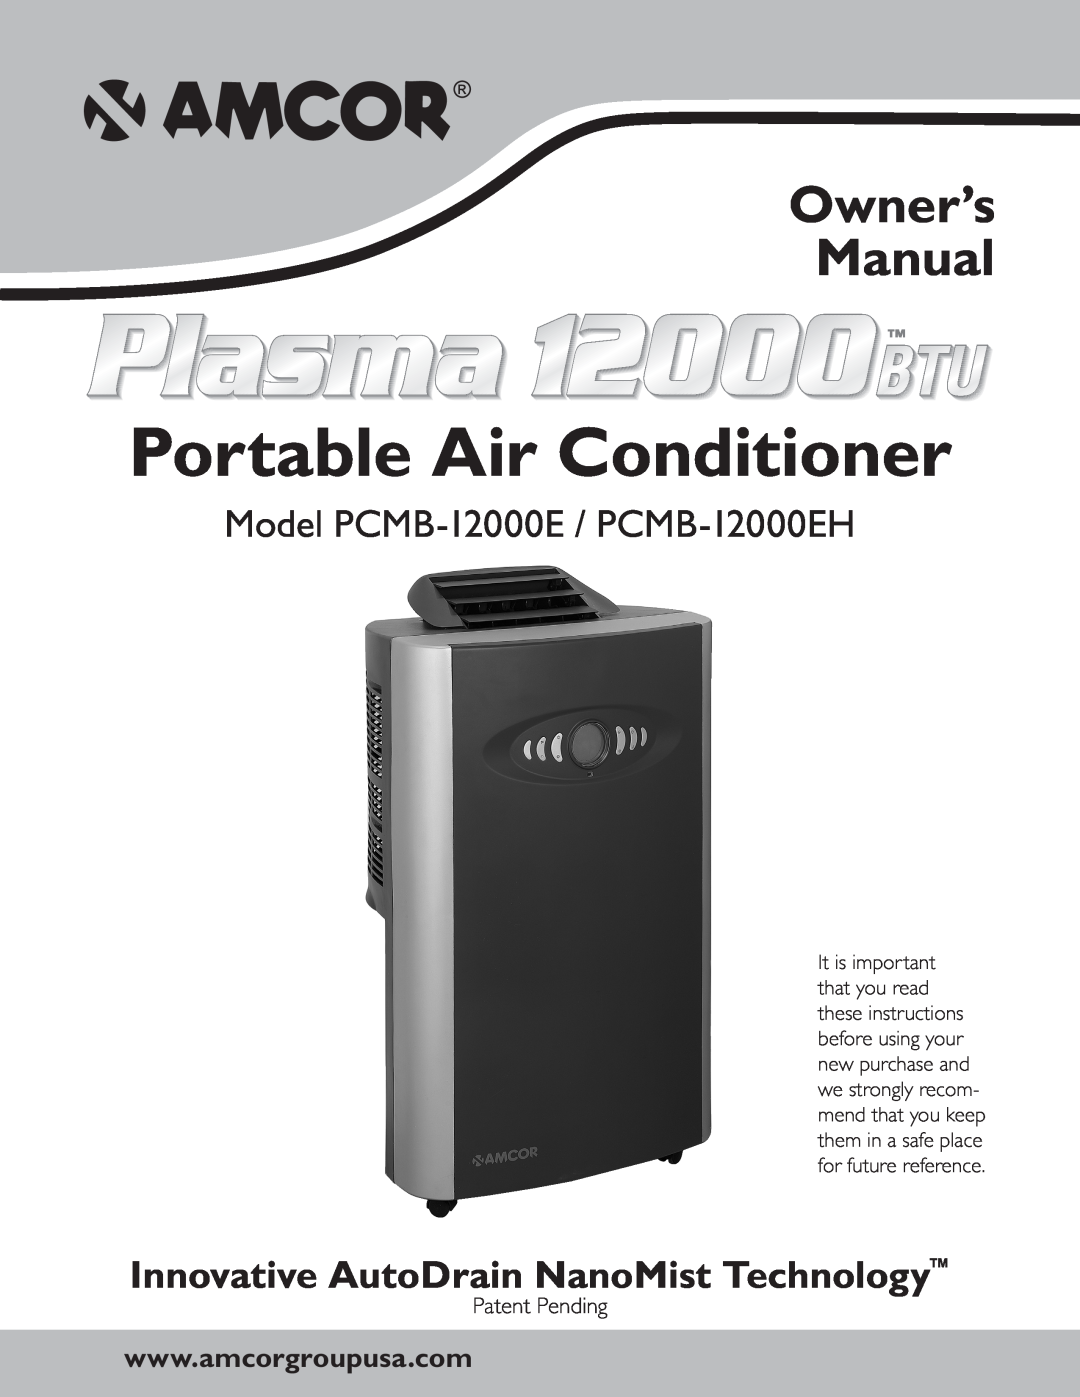 Amcor owner manual Portable Air Conditioner, Model PCMB-12000E / PCMB-12000EH, Innovative AutoDrain NanoMist Technology 